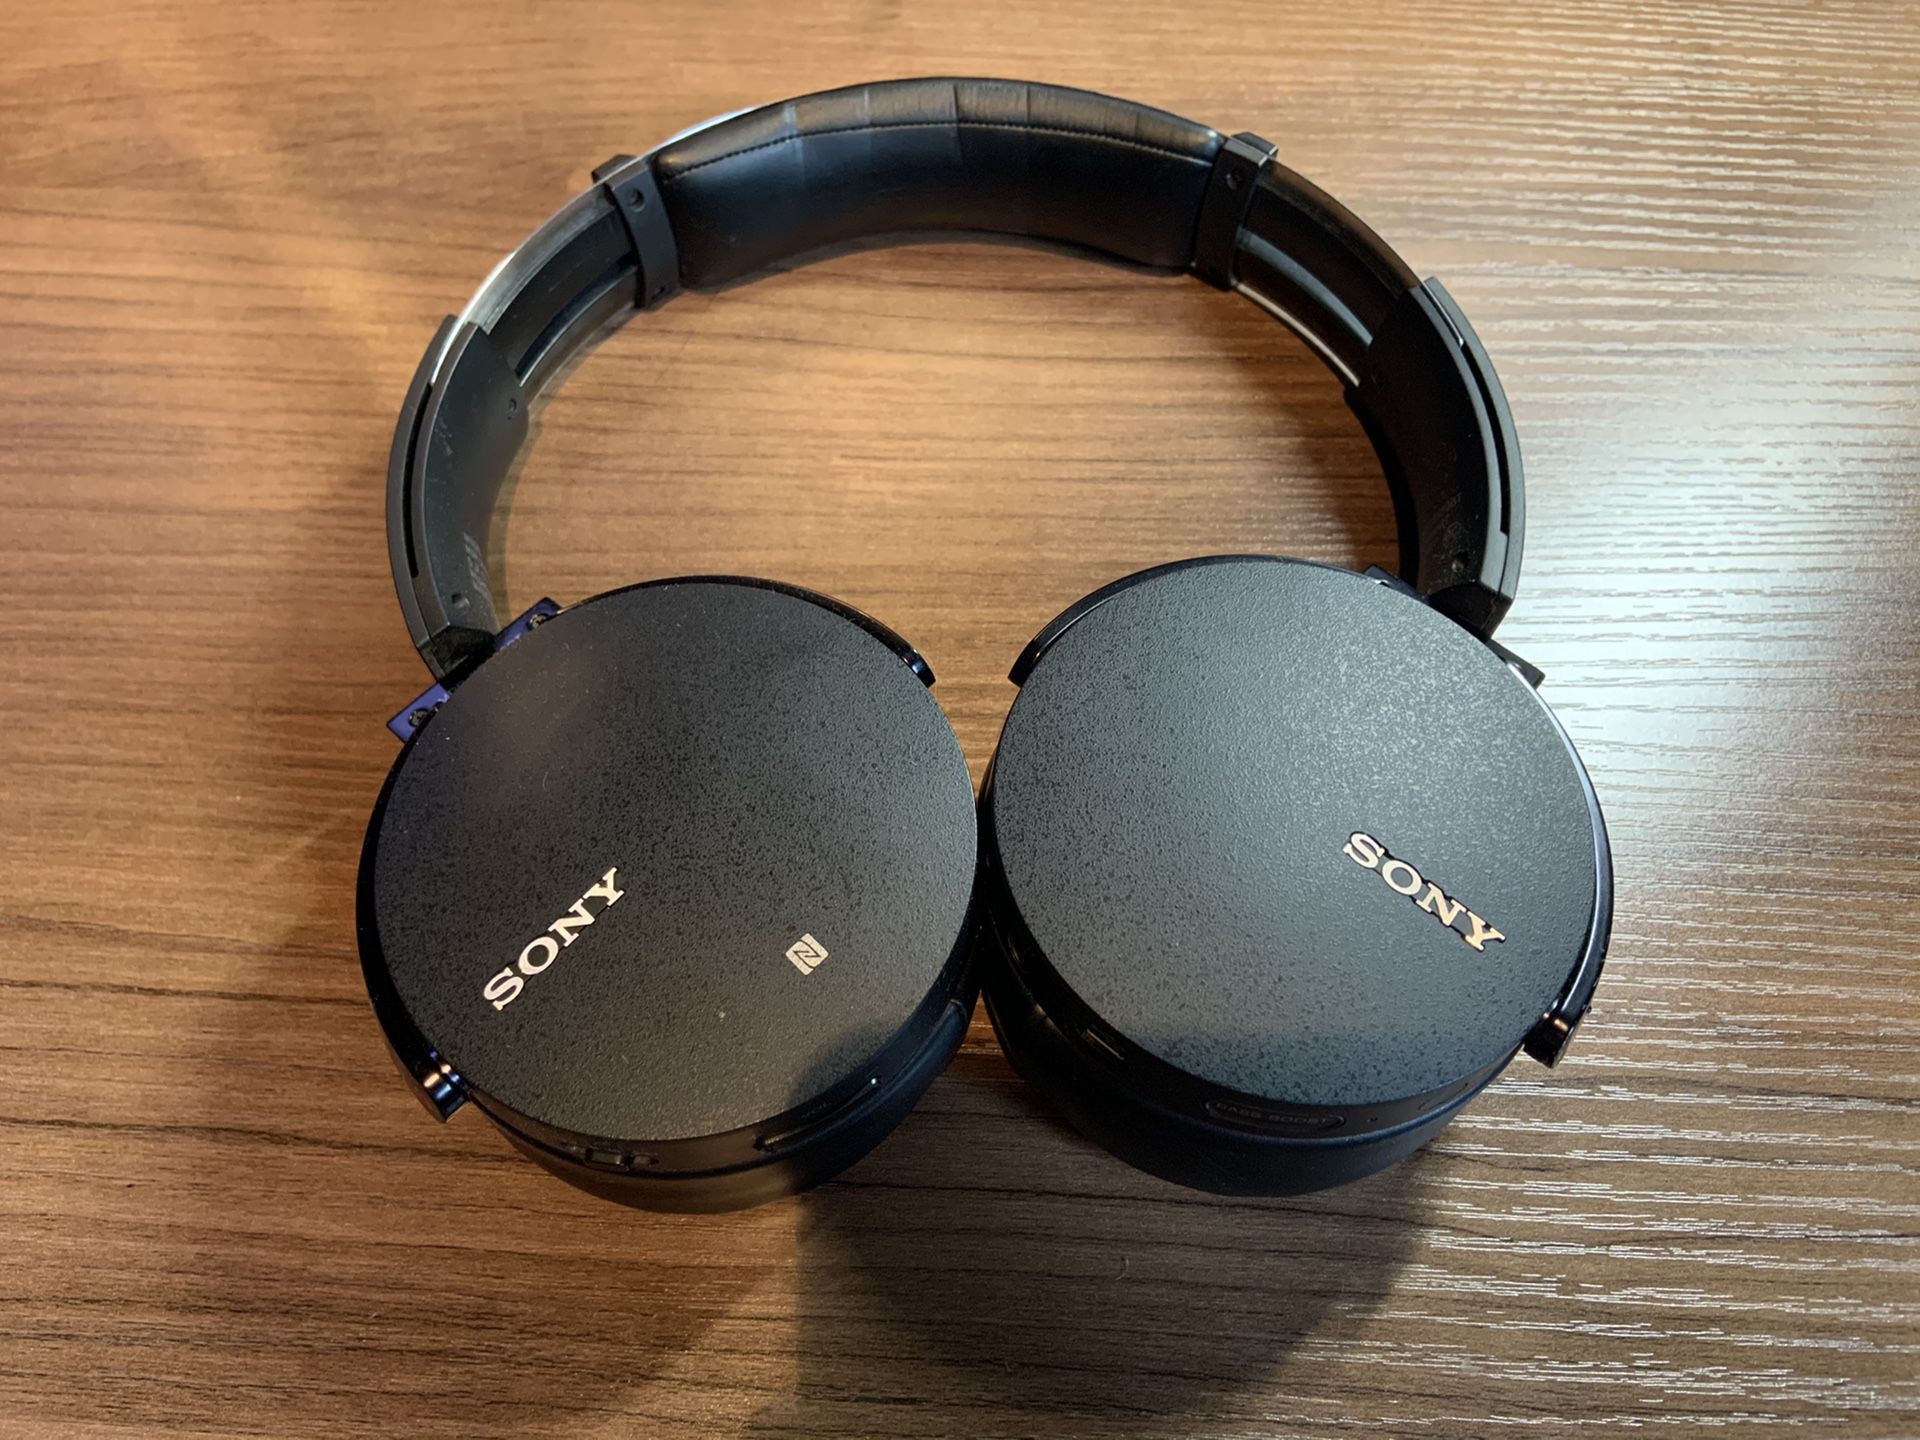 Sony XB950B1 Bass Boosted Over Ear Headphones